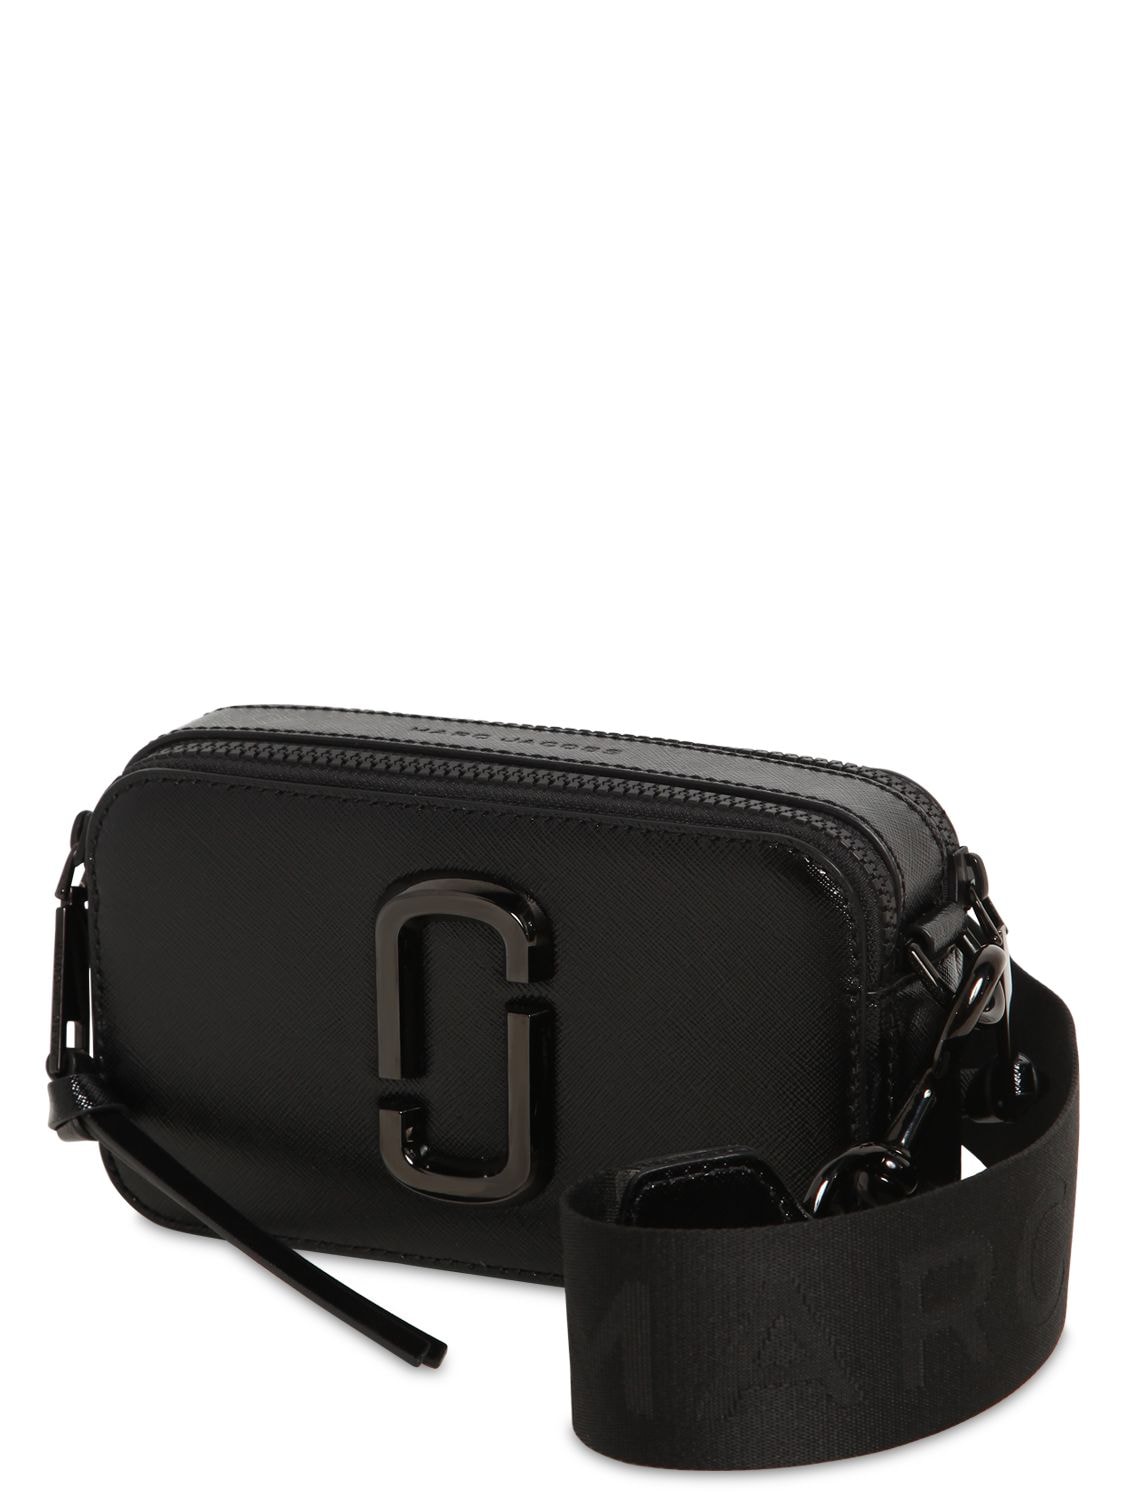 Marc Jacobs The Snapshot DTM Black Leather Camera Bag